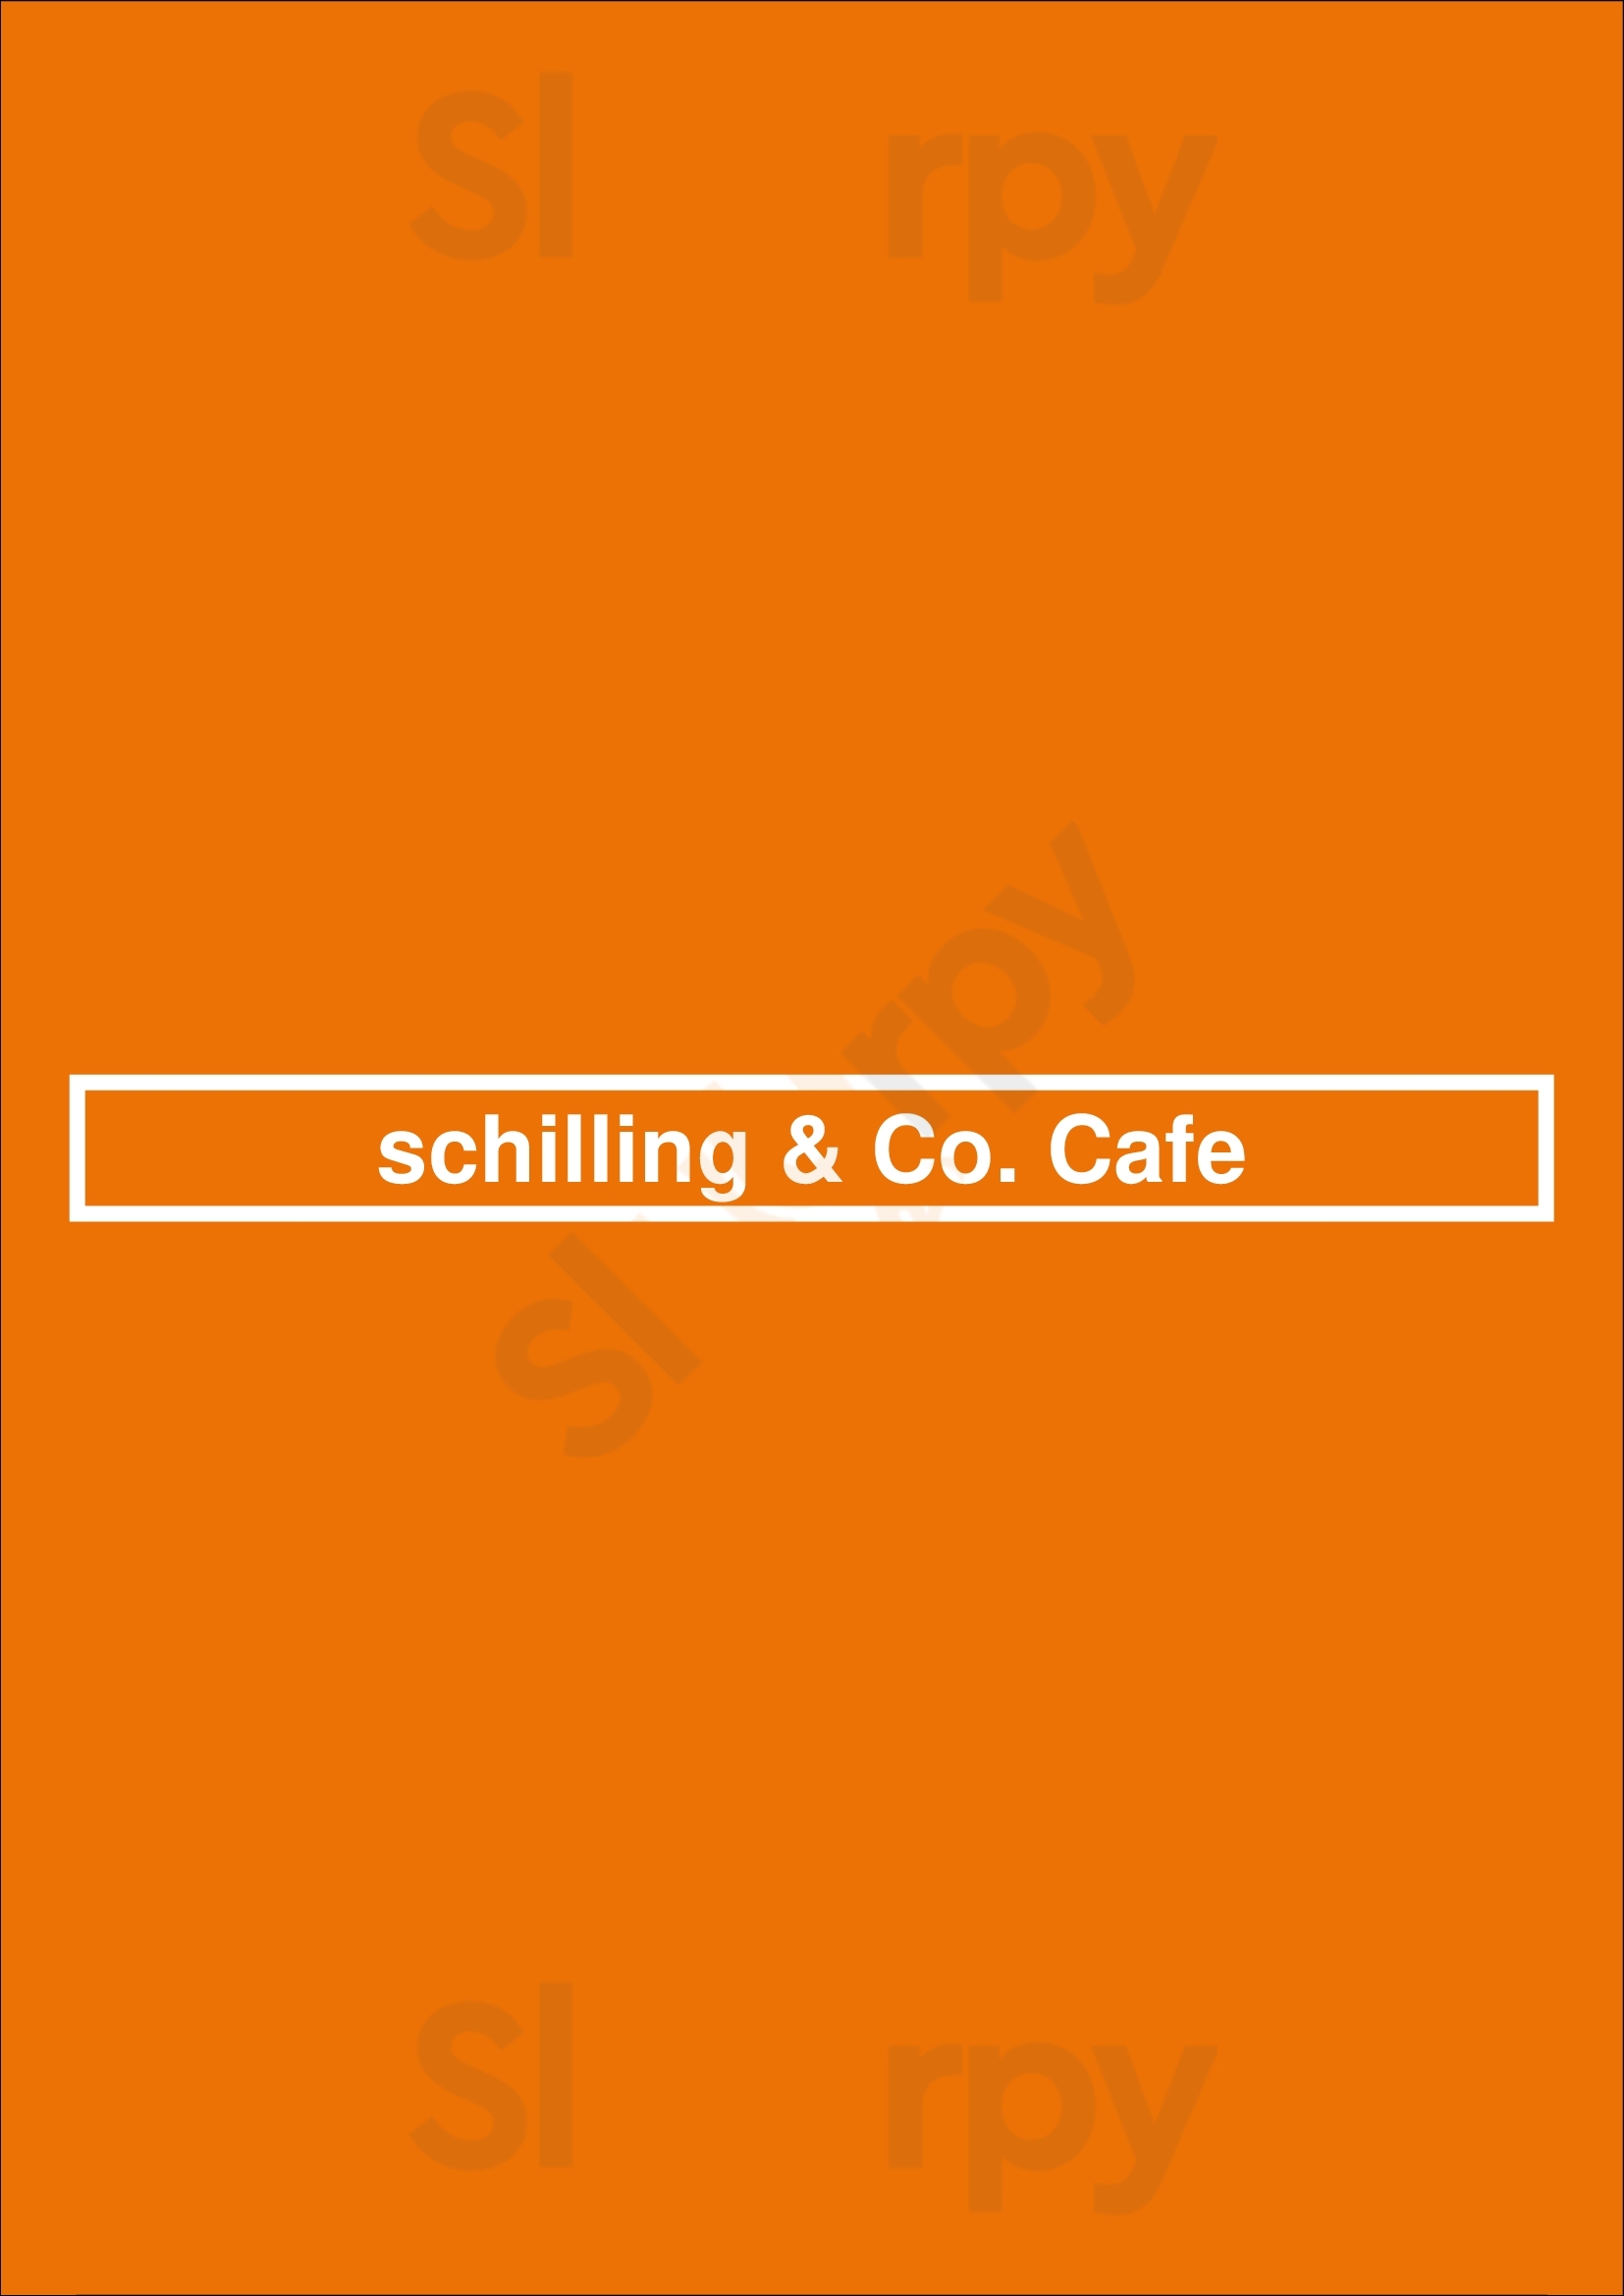 Schilling & Co. Cafe San Francisco Menu - 1